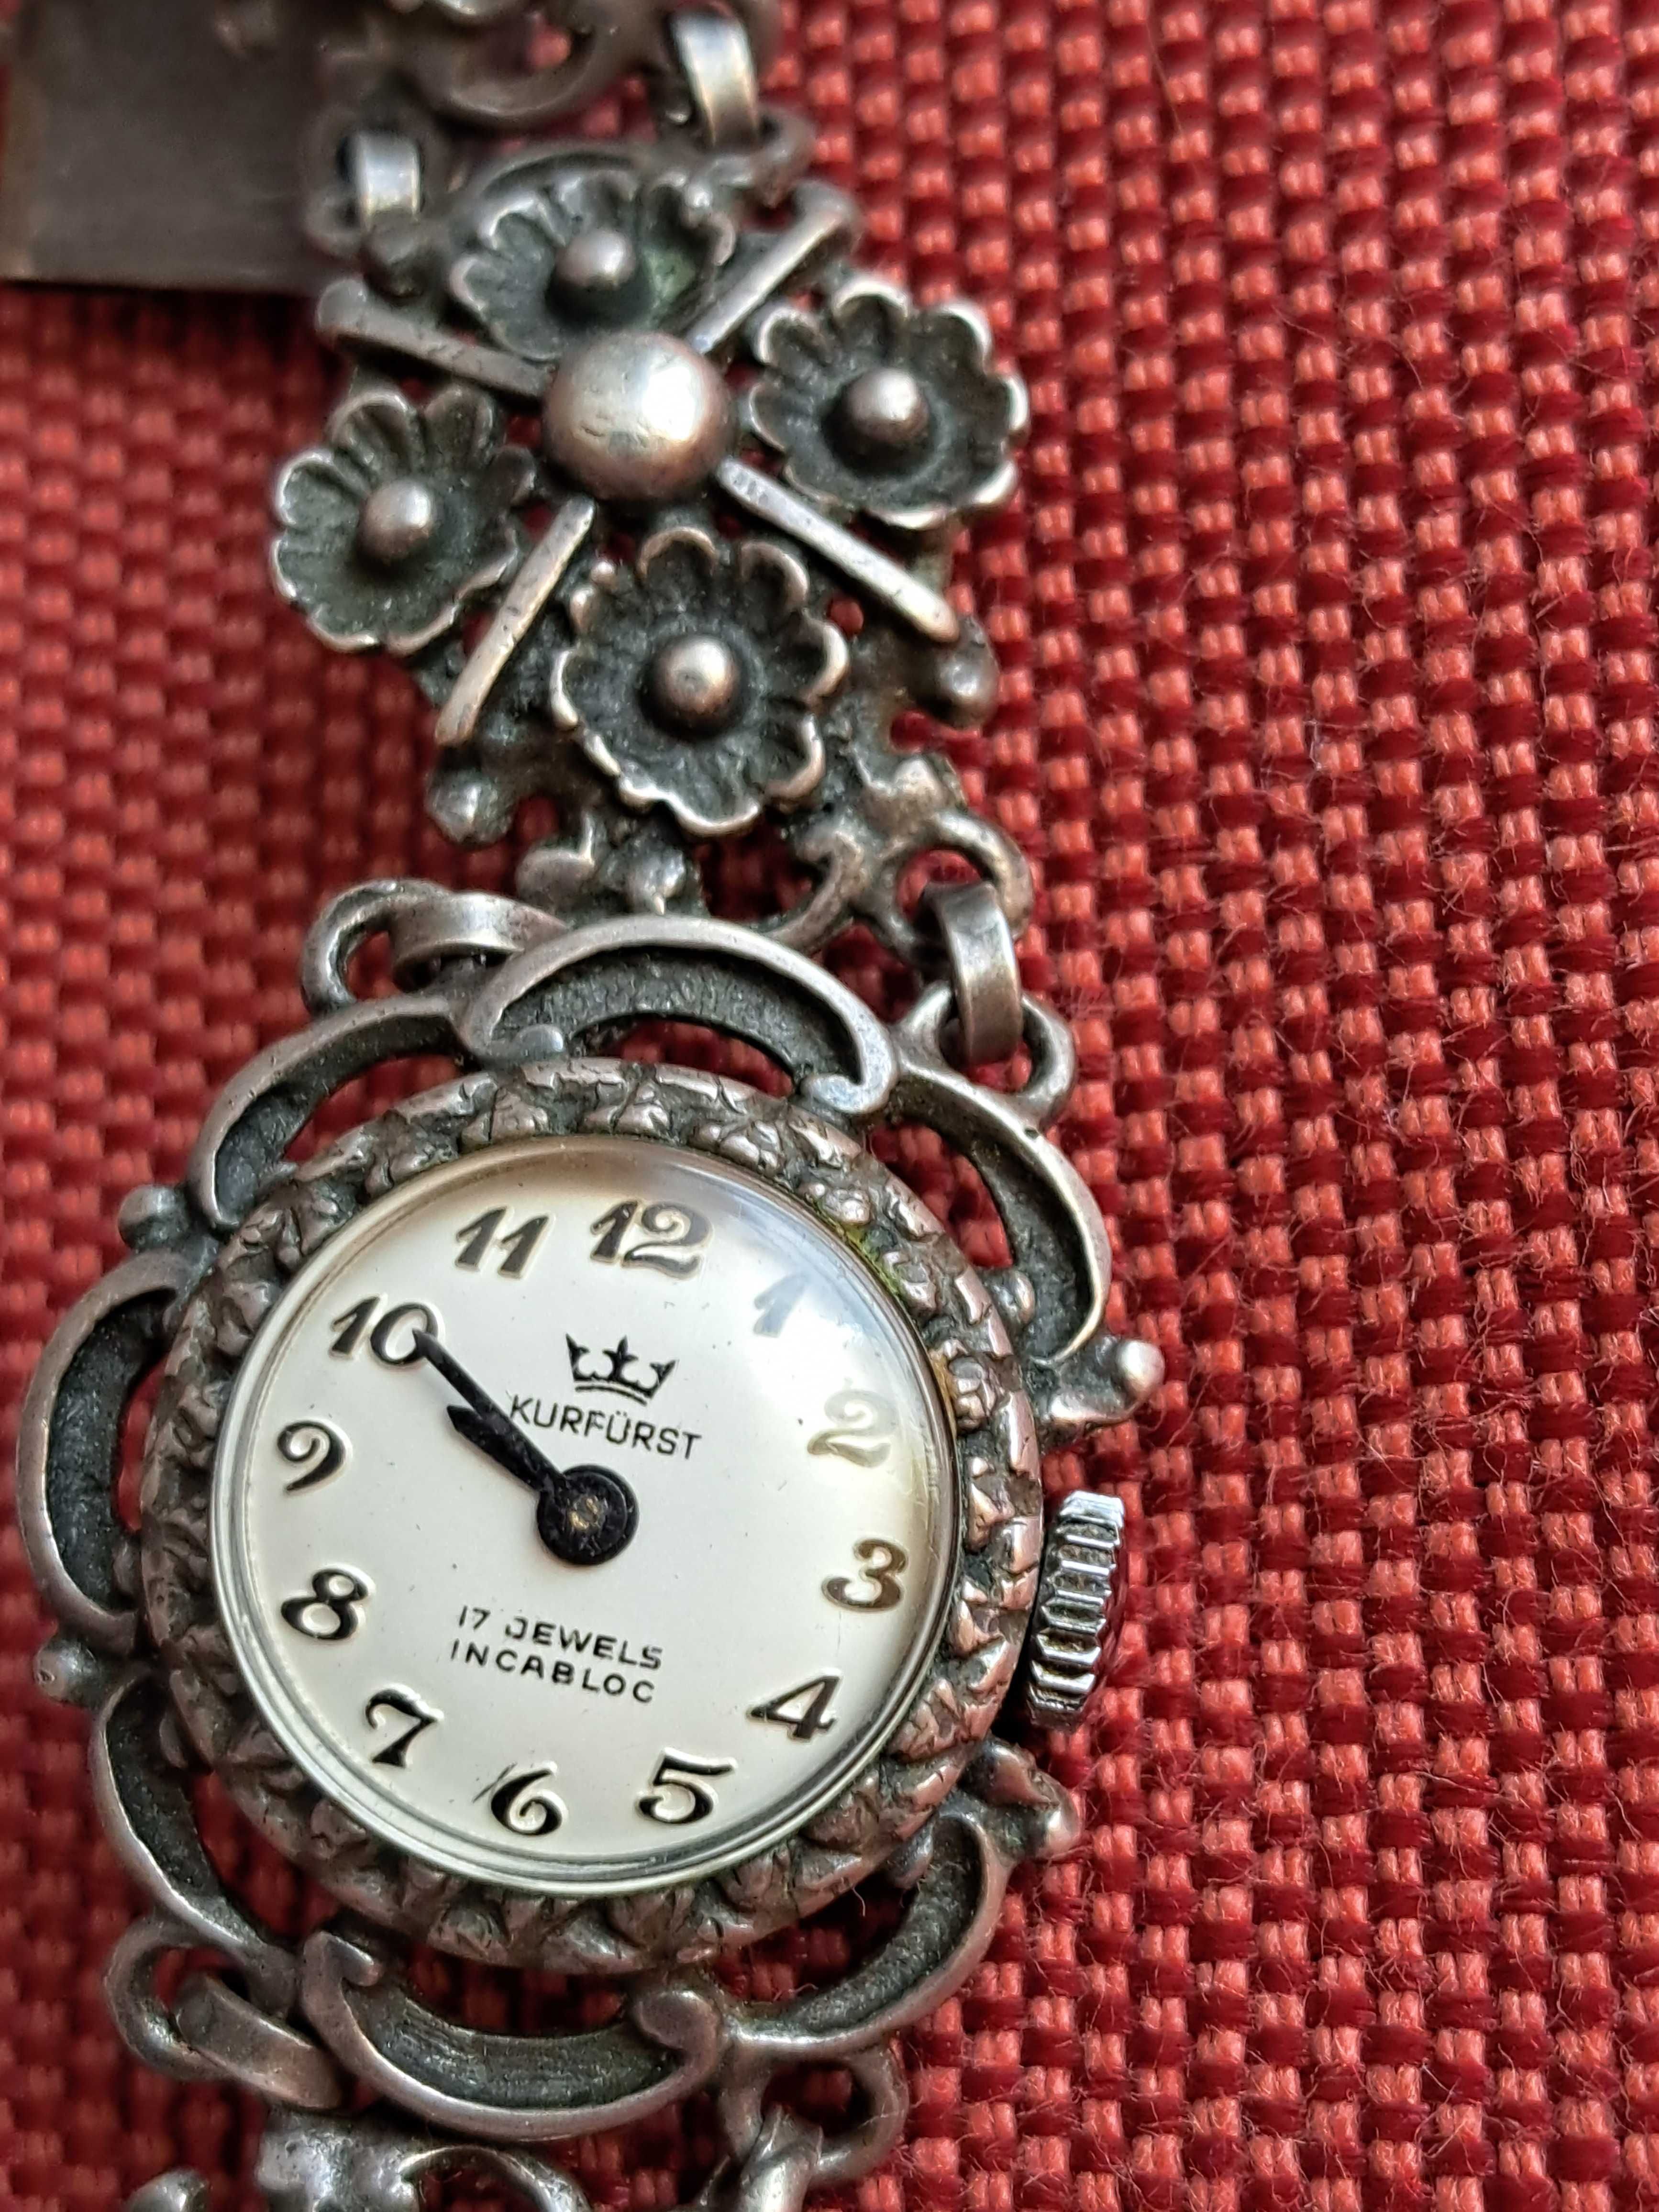 Stare srebro * Kurfürst srebrny 835 zegarek